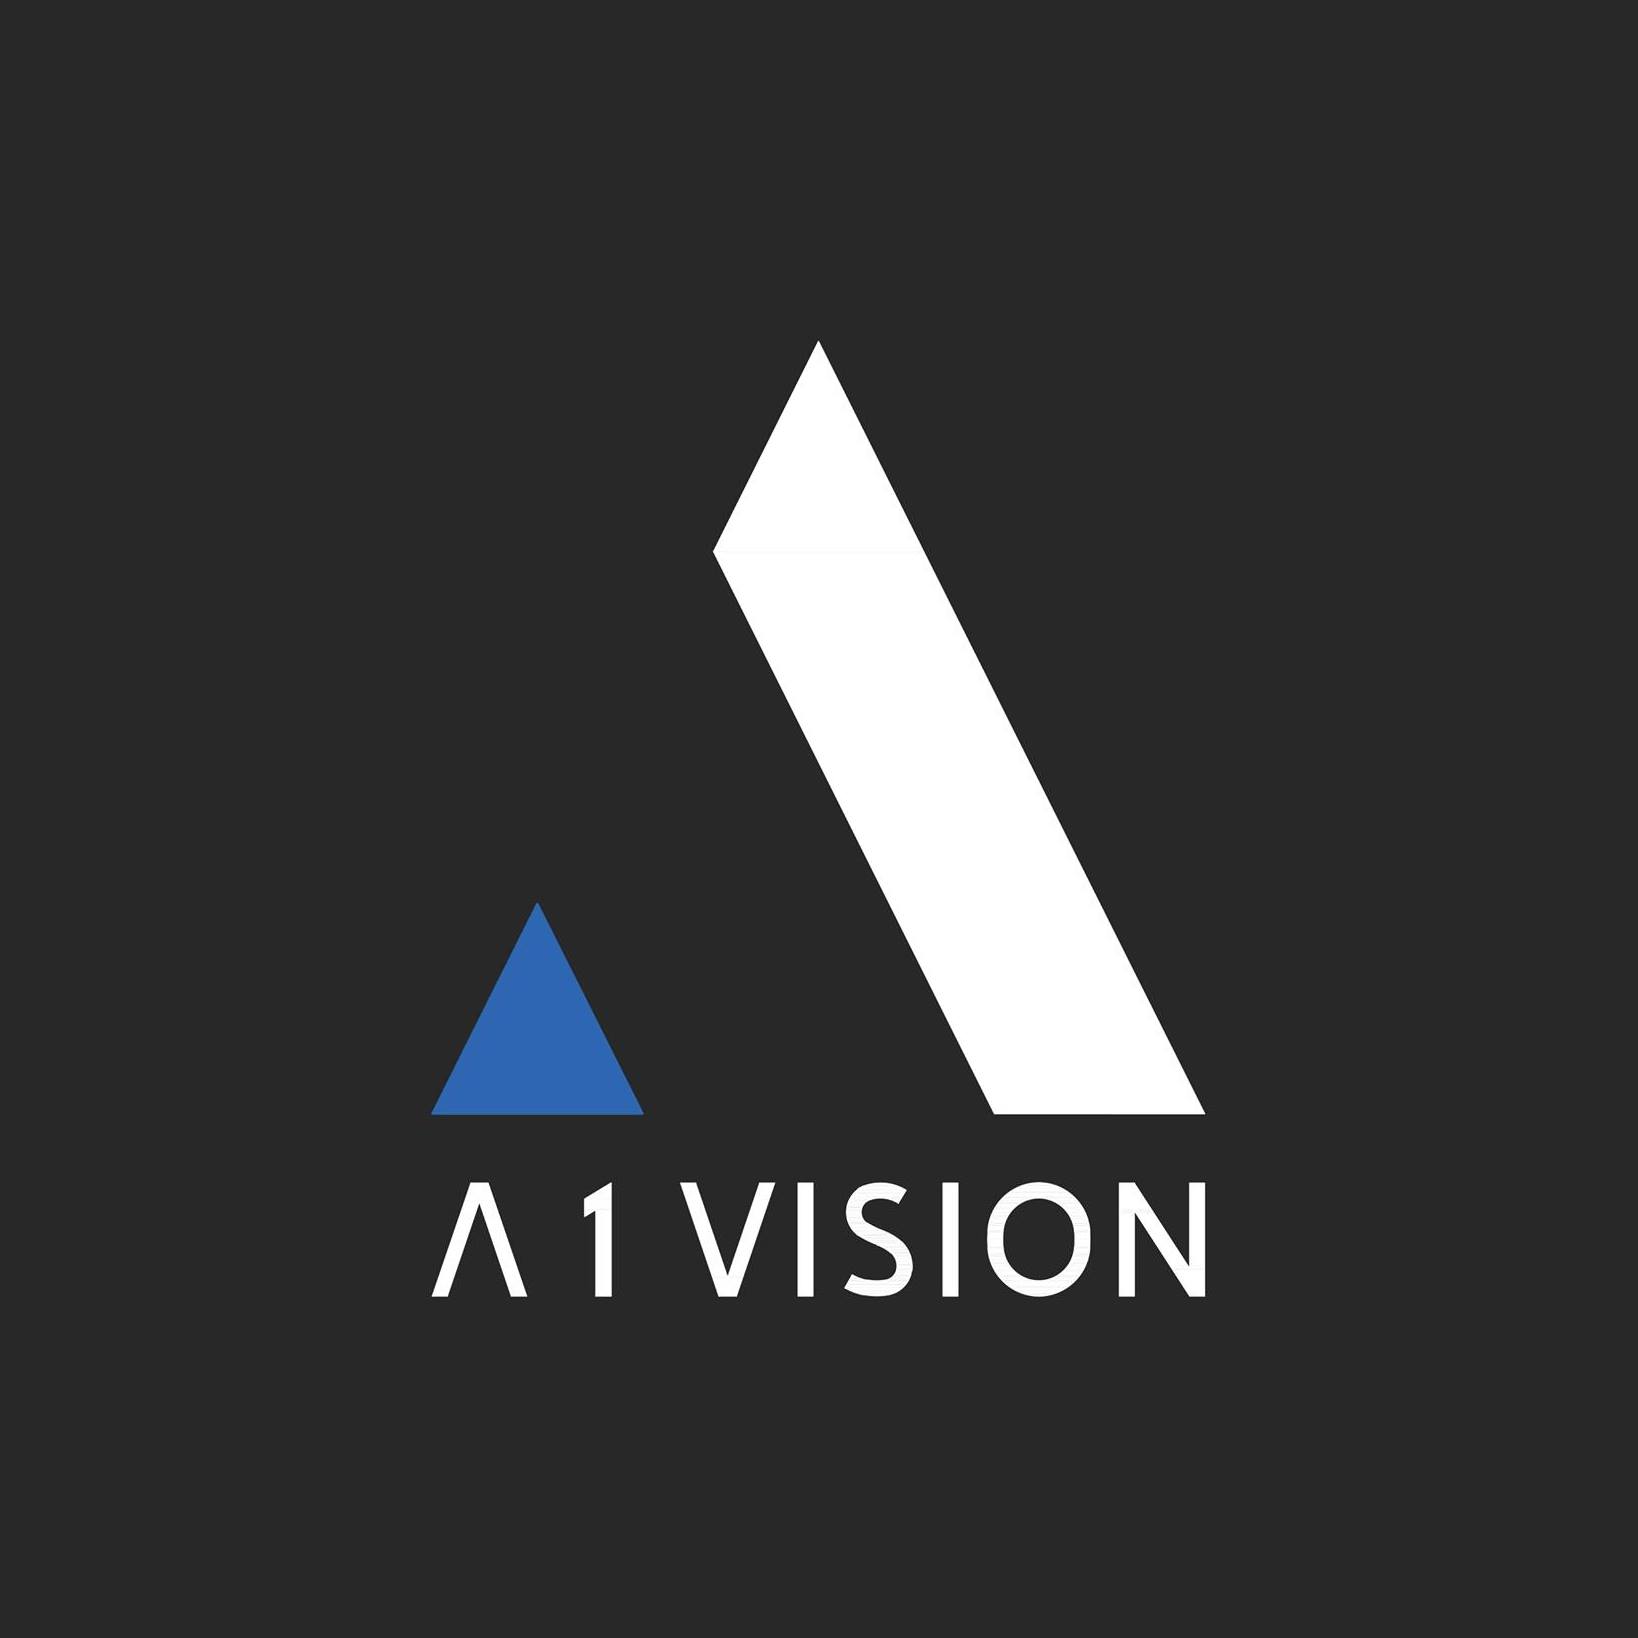 A1 Vision